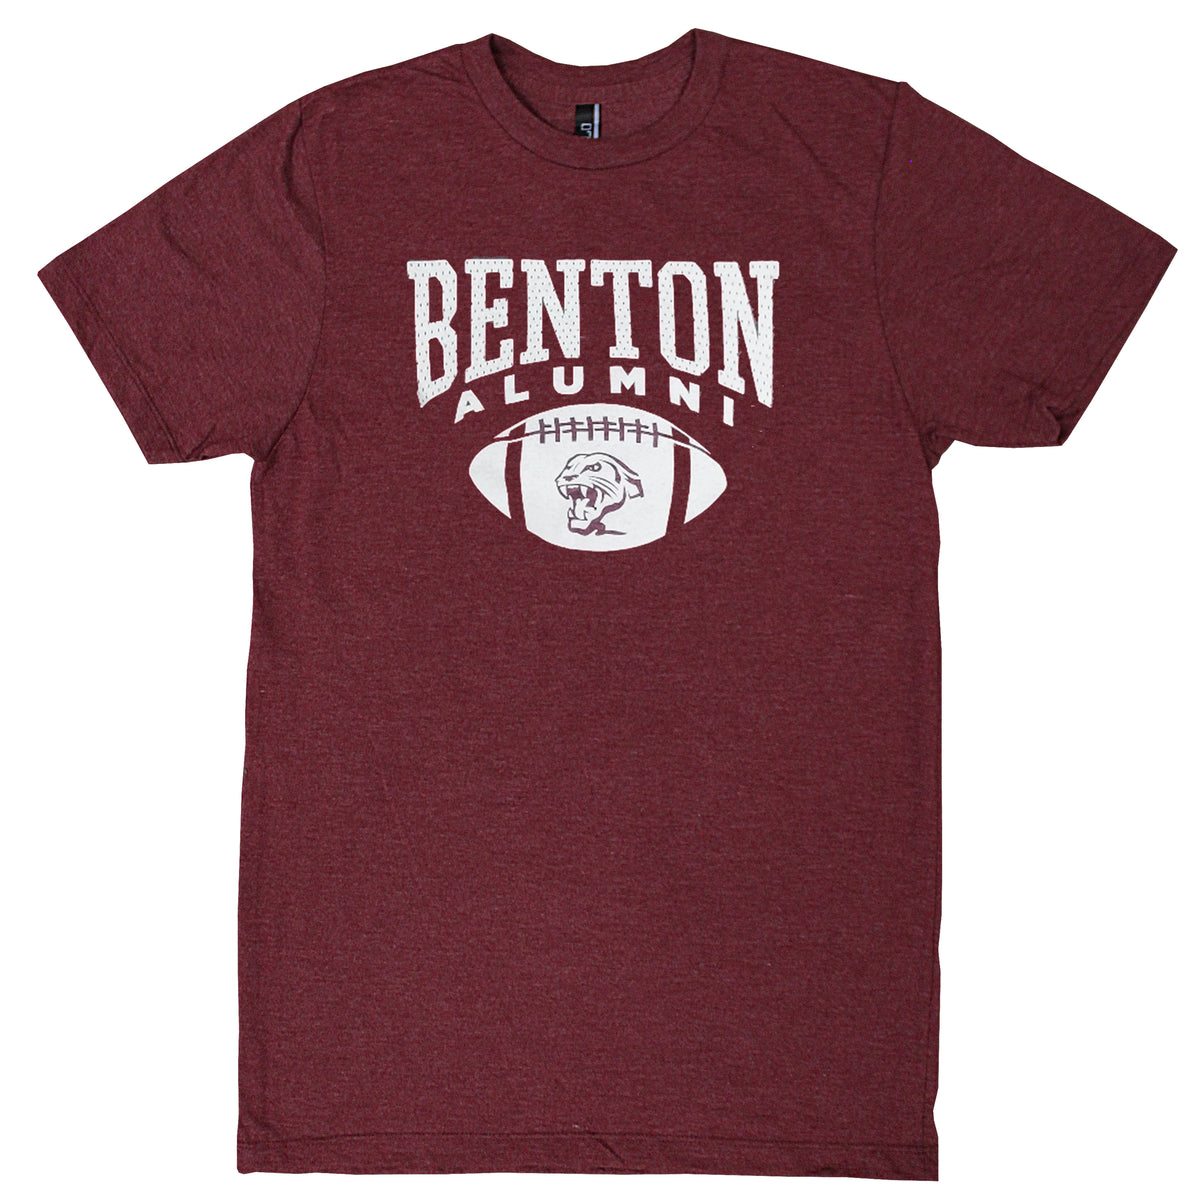 Benton Alumni Tee